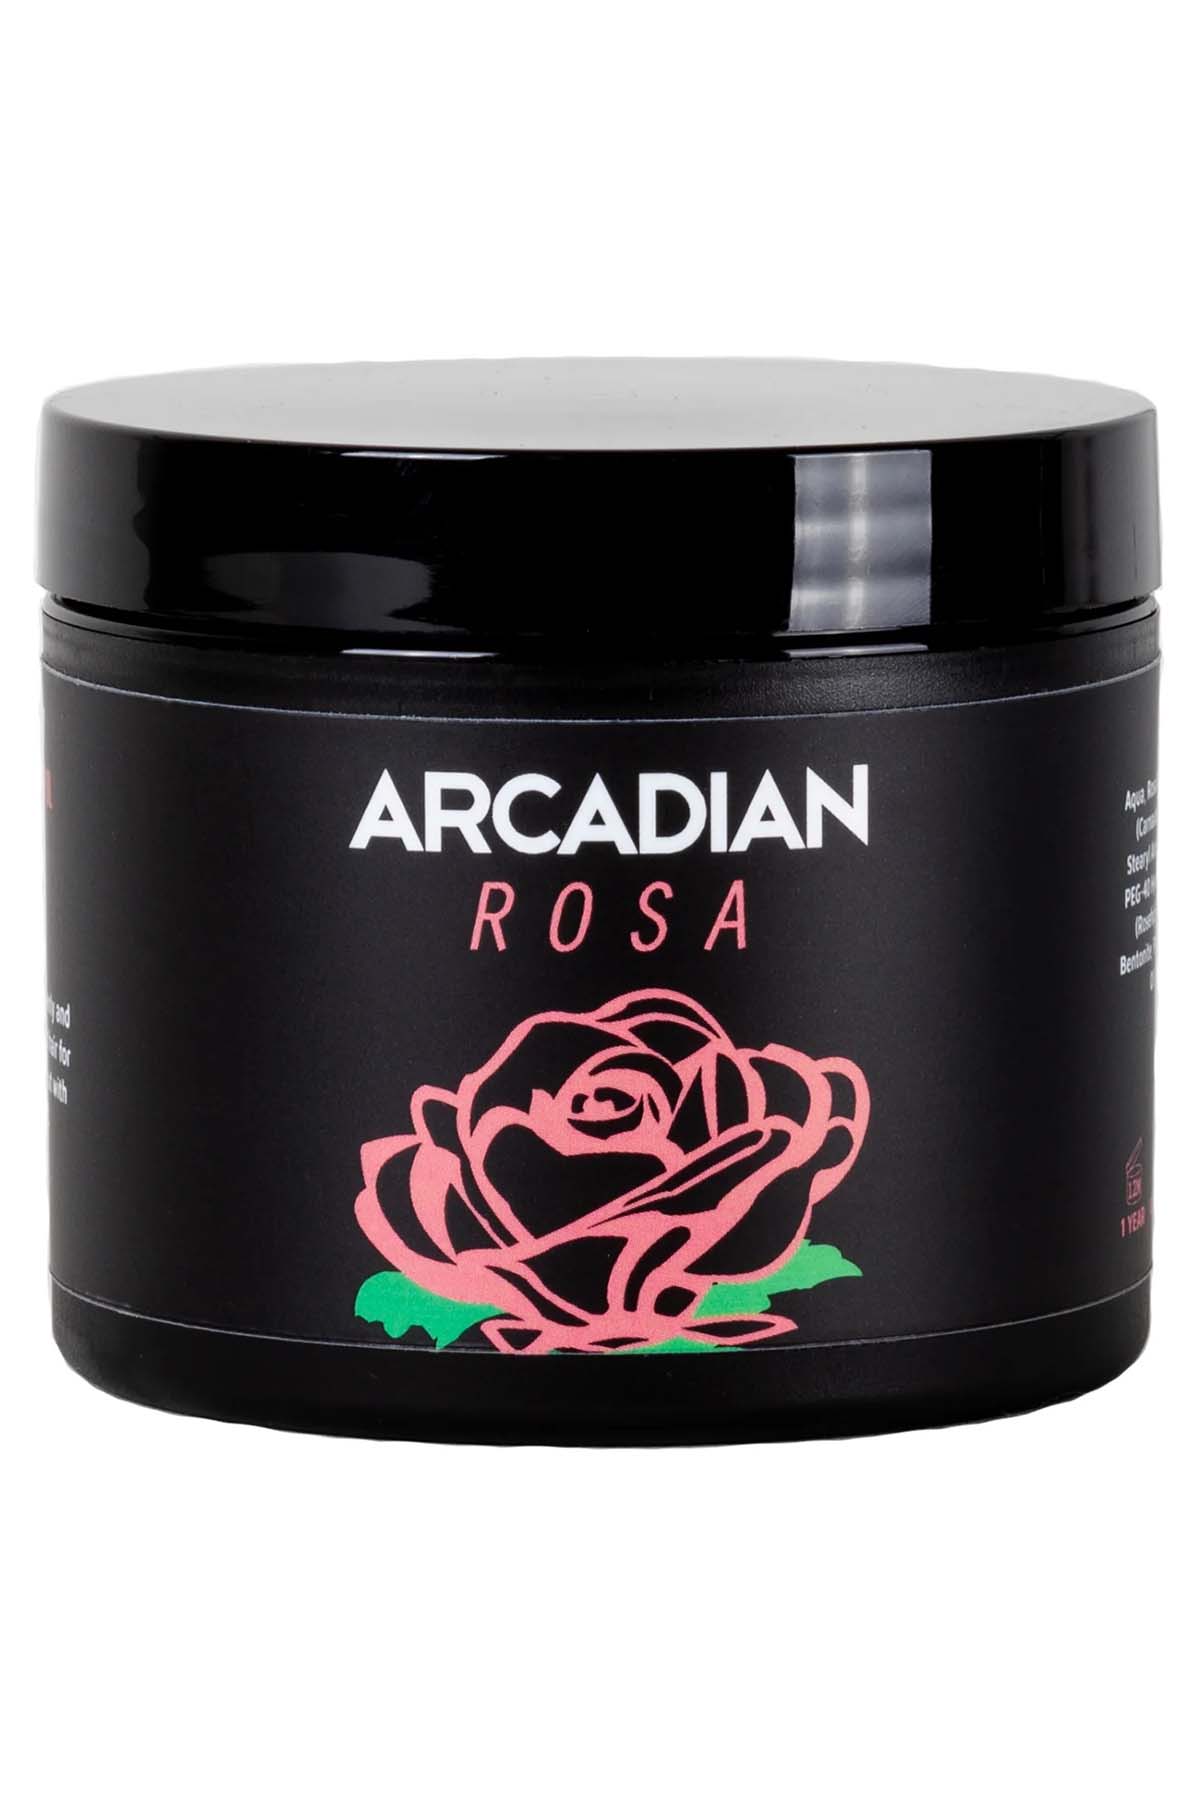 Arcadian Rosa Styling Clay 4oz